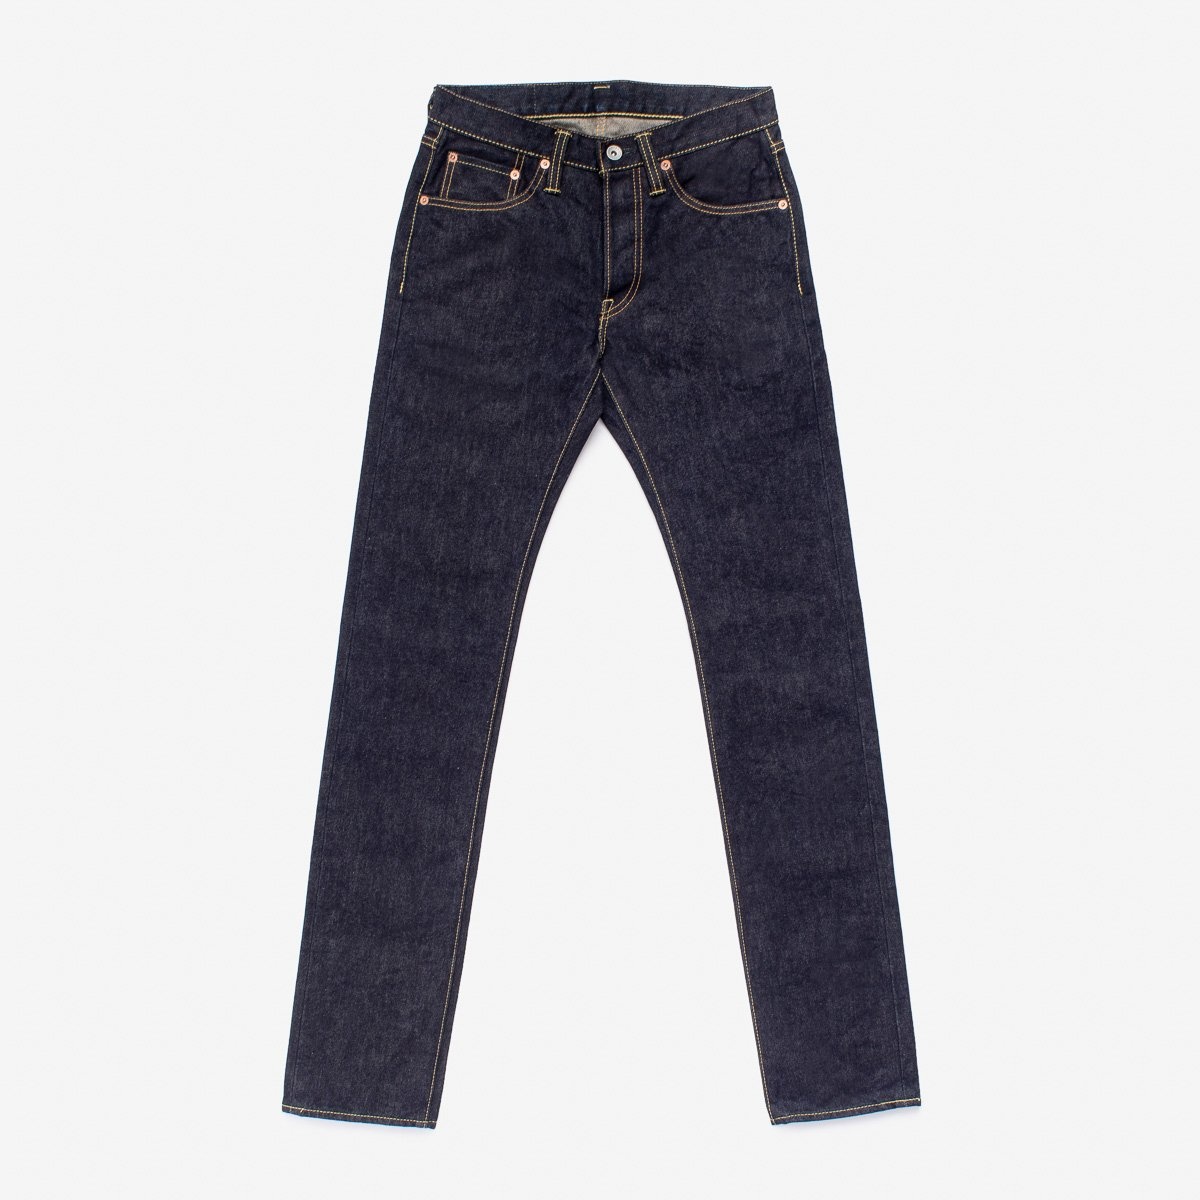 IH-777S-142 14oz Selvedge Denim Slim Tapered Cut Jeans - Indigo - 1